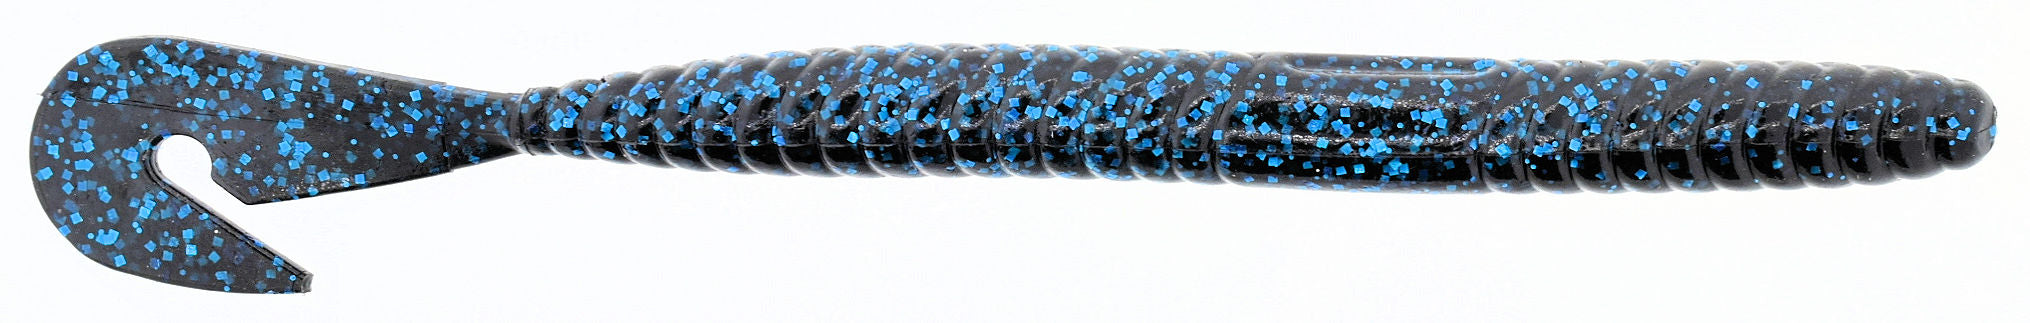 Burner Worm_Black Blue Glitter